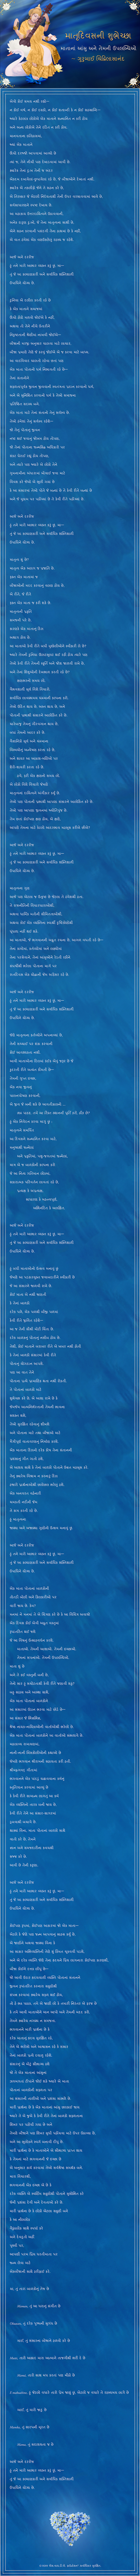 Gujarati Poem